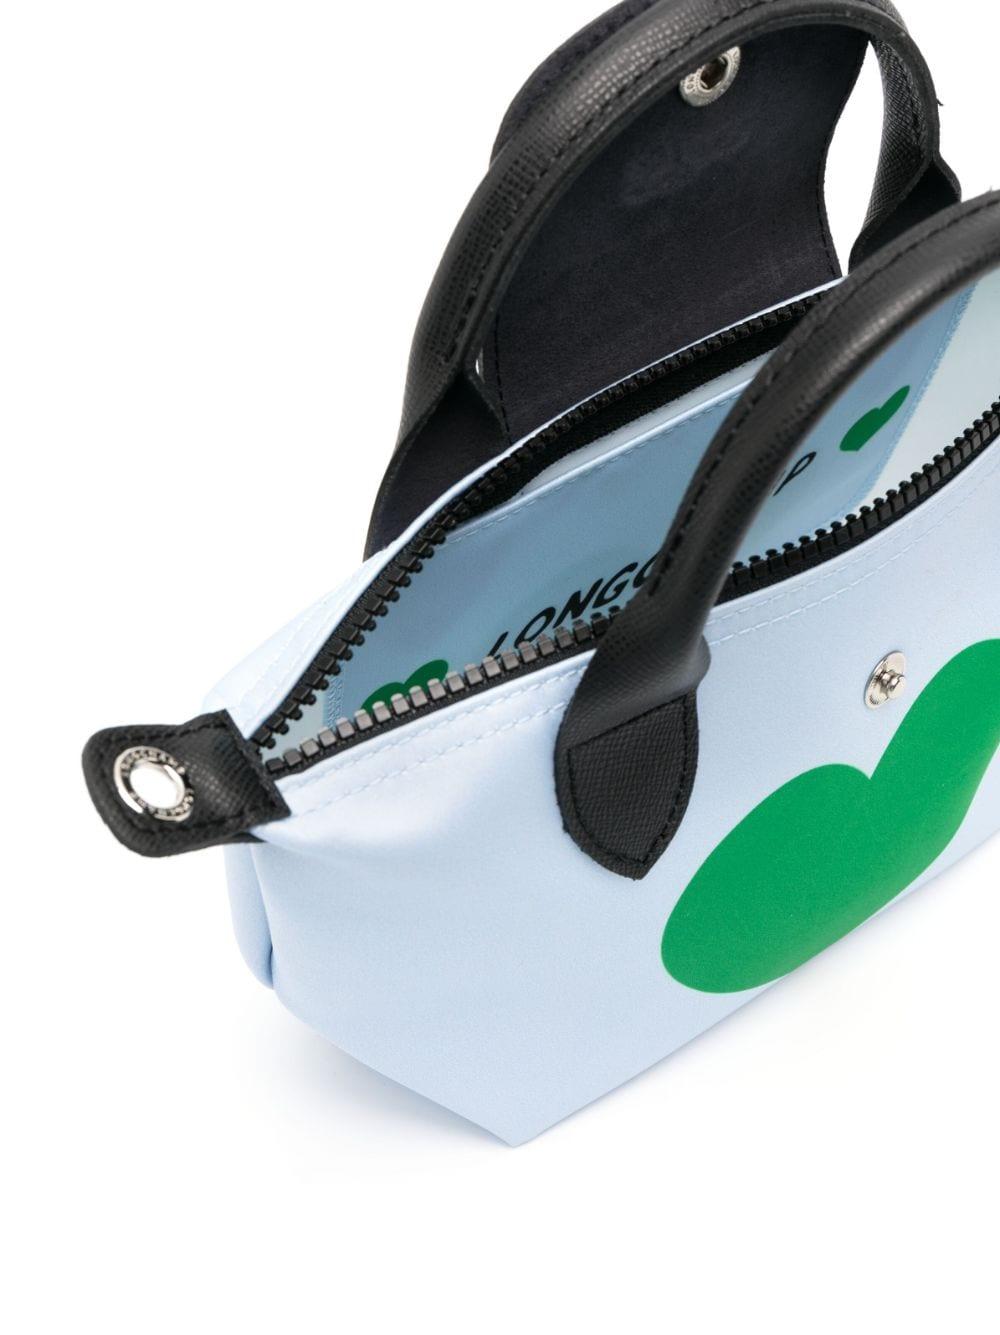 Longchamp Le Pliage Heart-print Mini Bag in Green